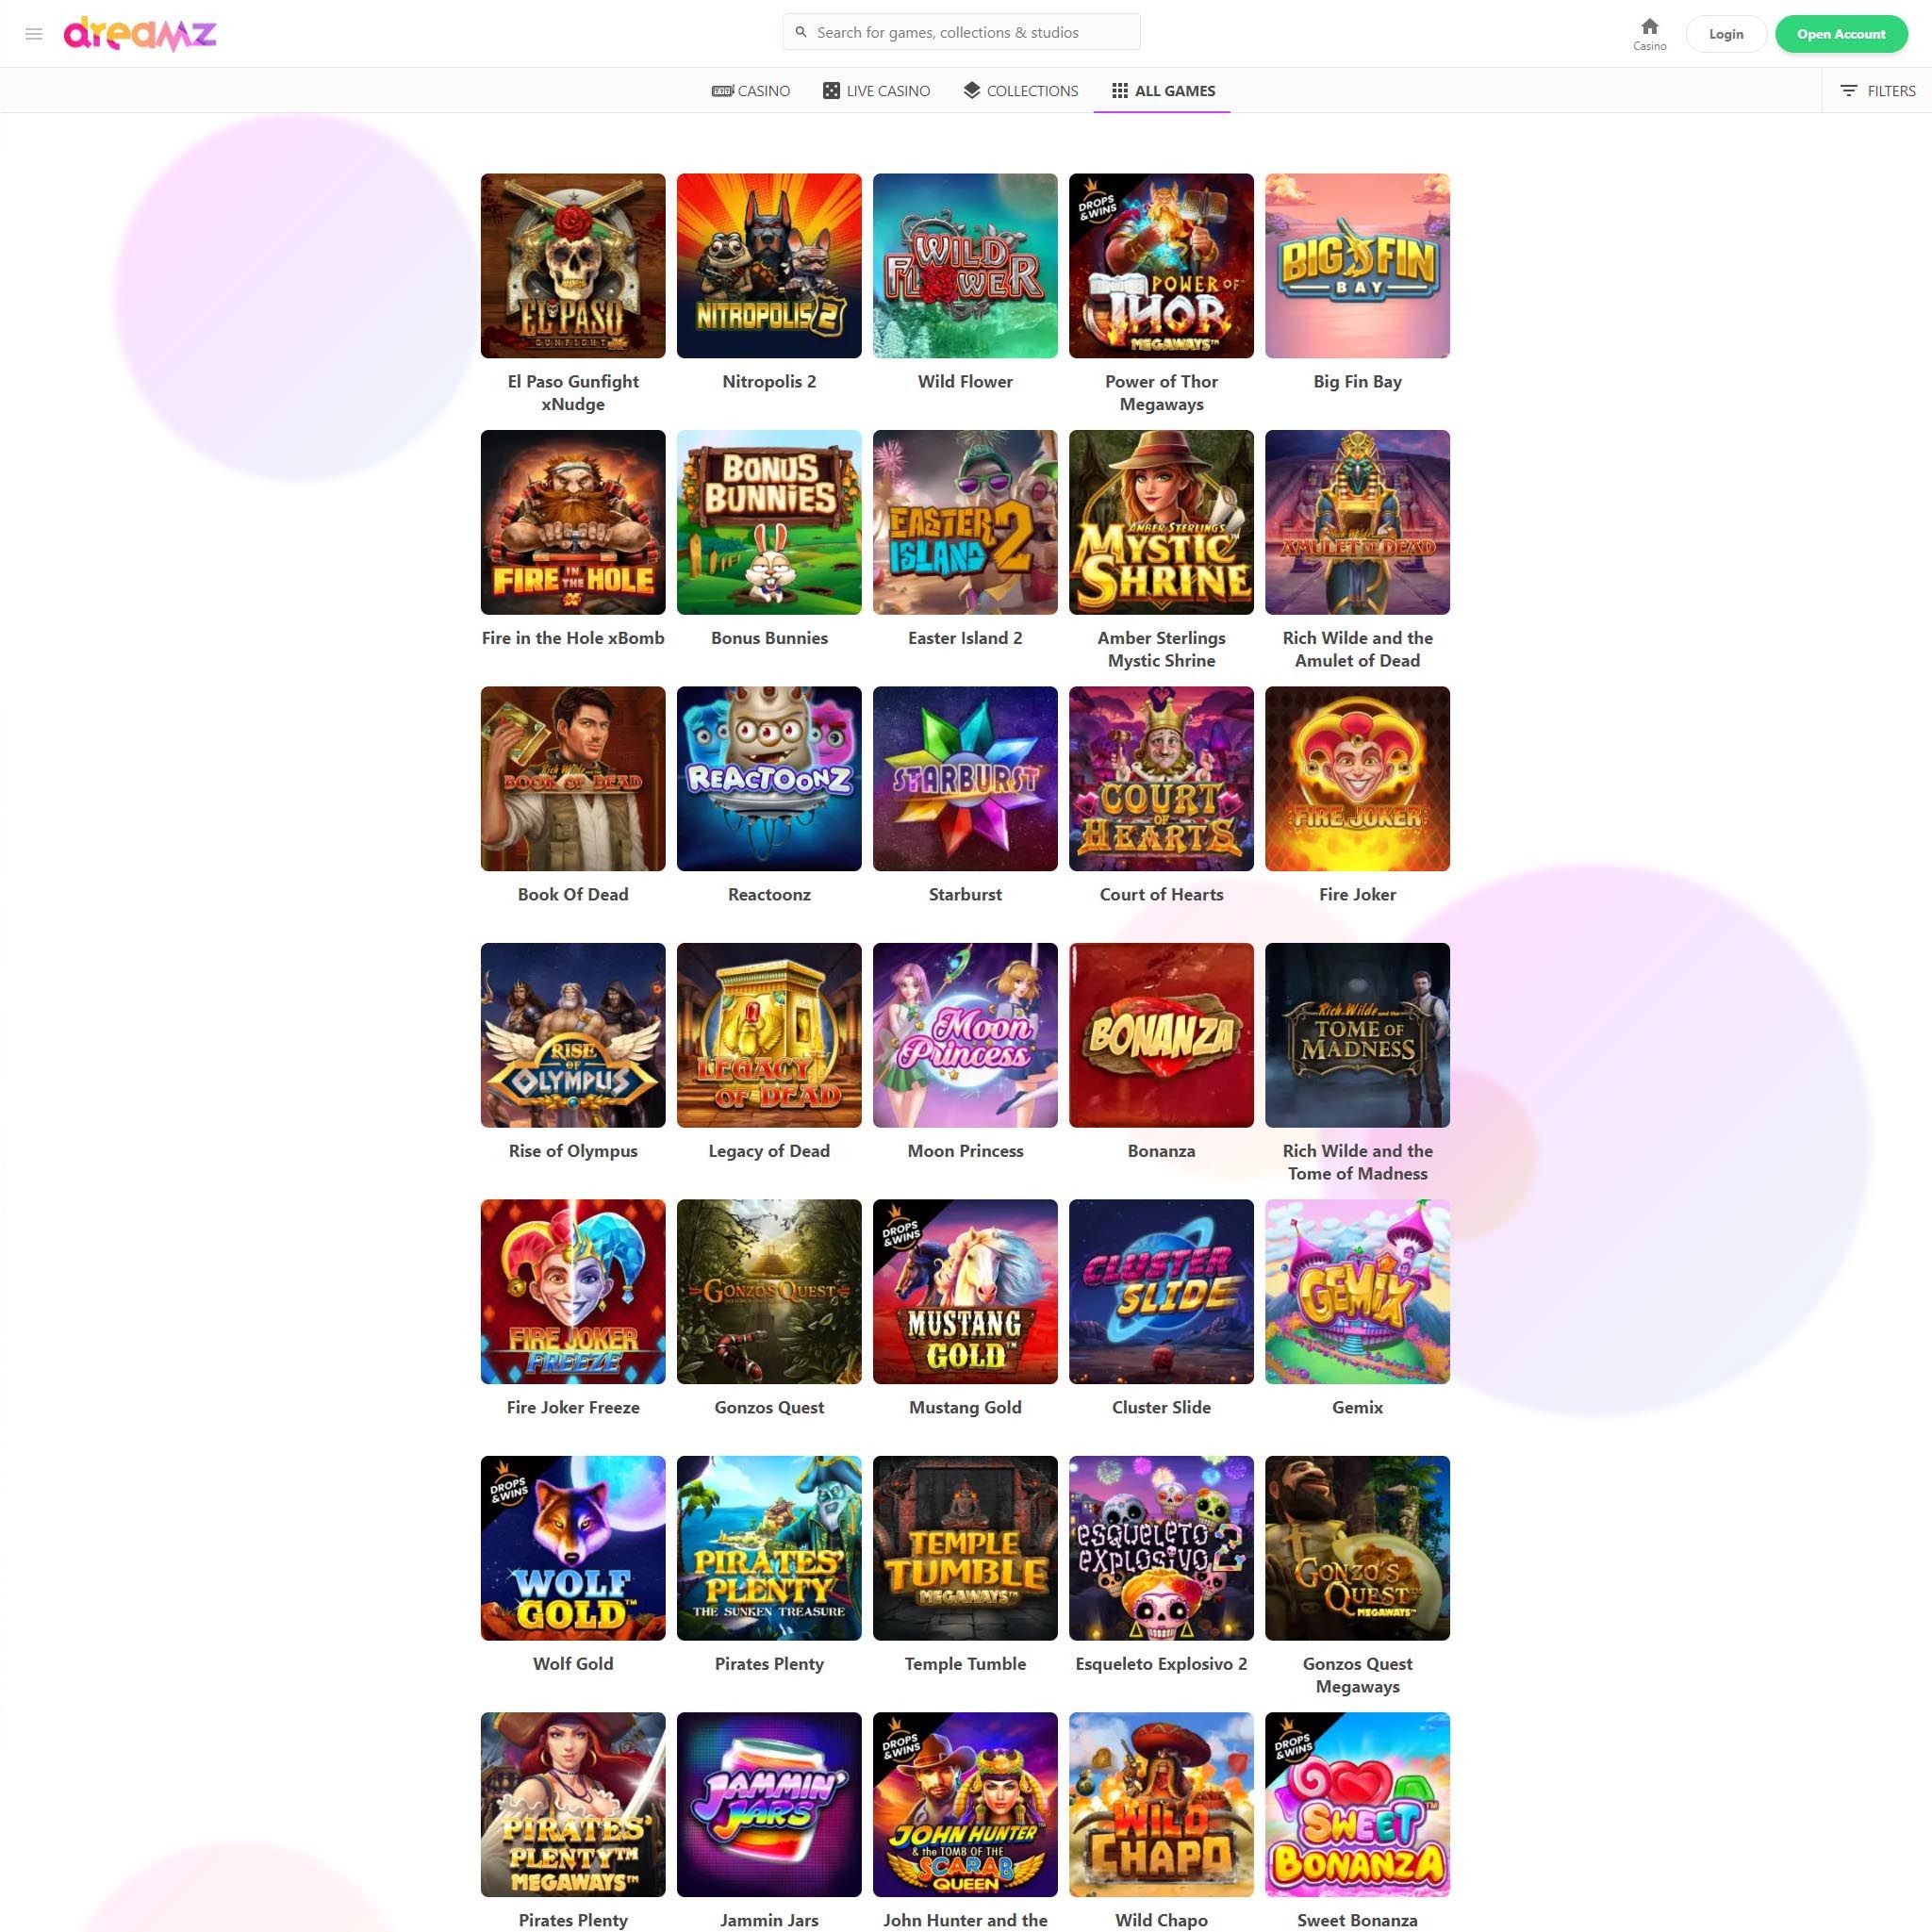 Dreamz Casino full games catalogue